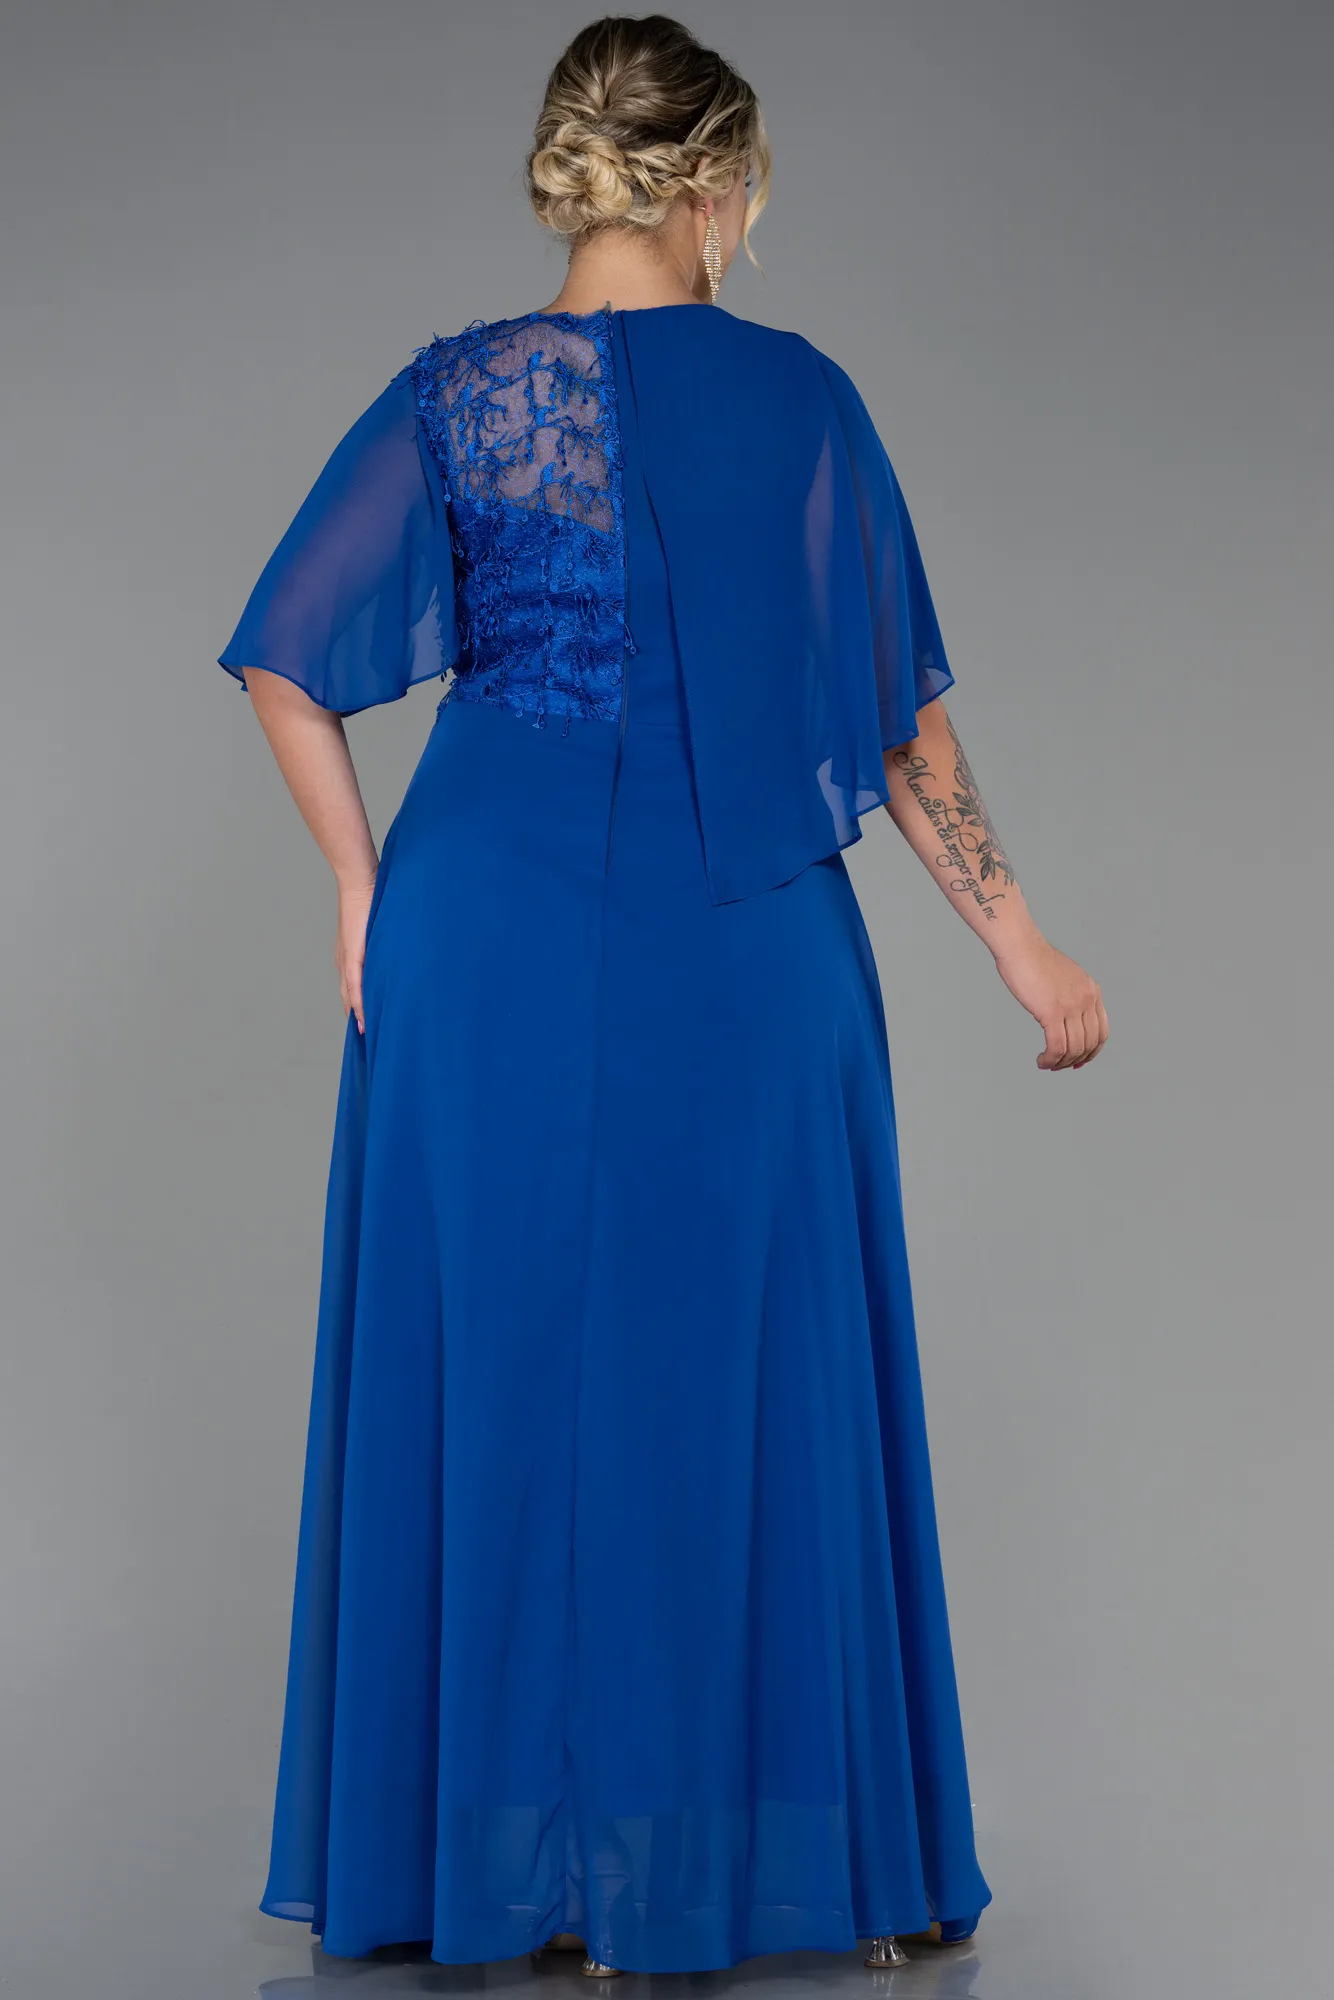 Sax Blue-Long Chiffon Plus Size Evening Dress ABU3257